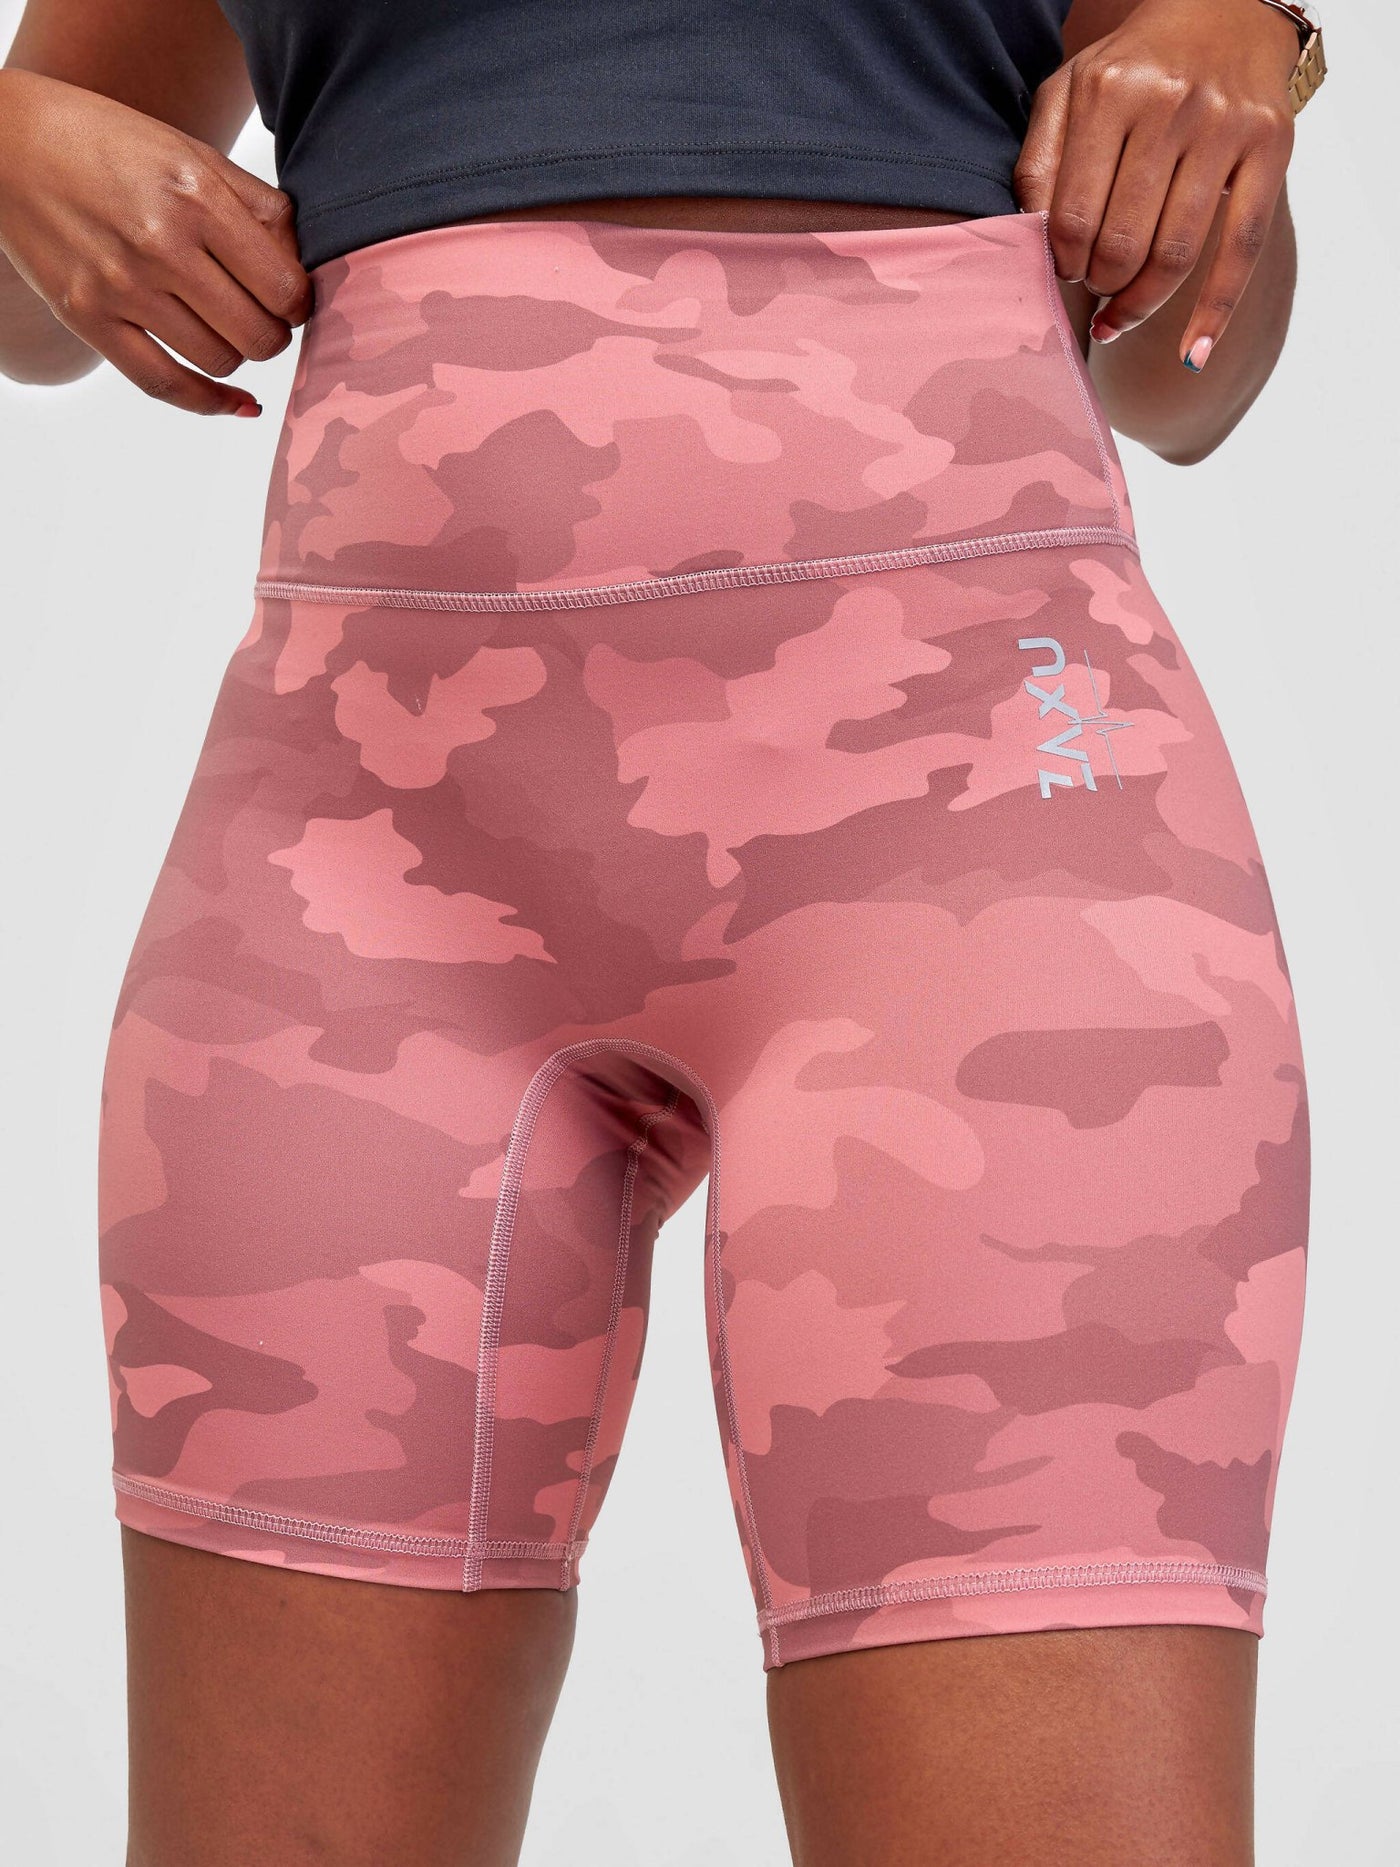 Zaxu Sports Camo Shorts - Pink - Shopzetu